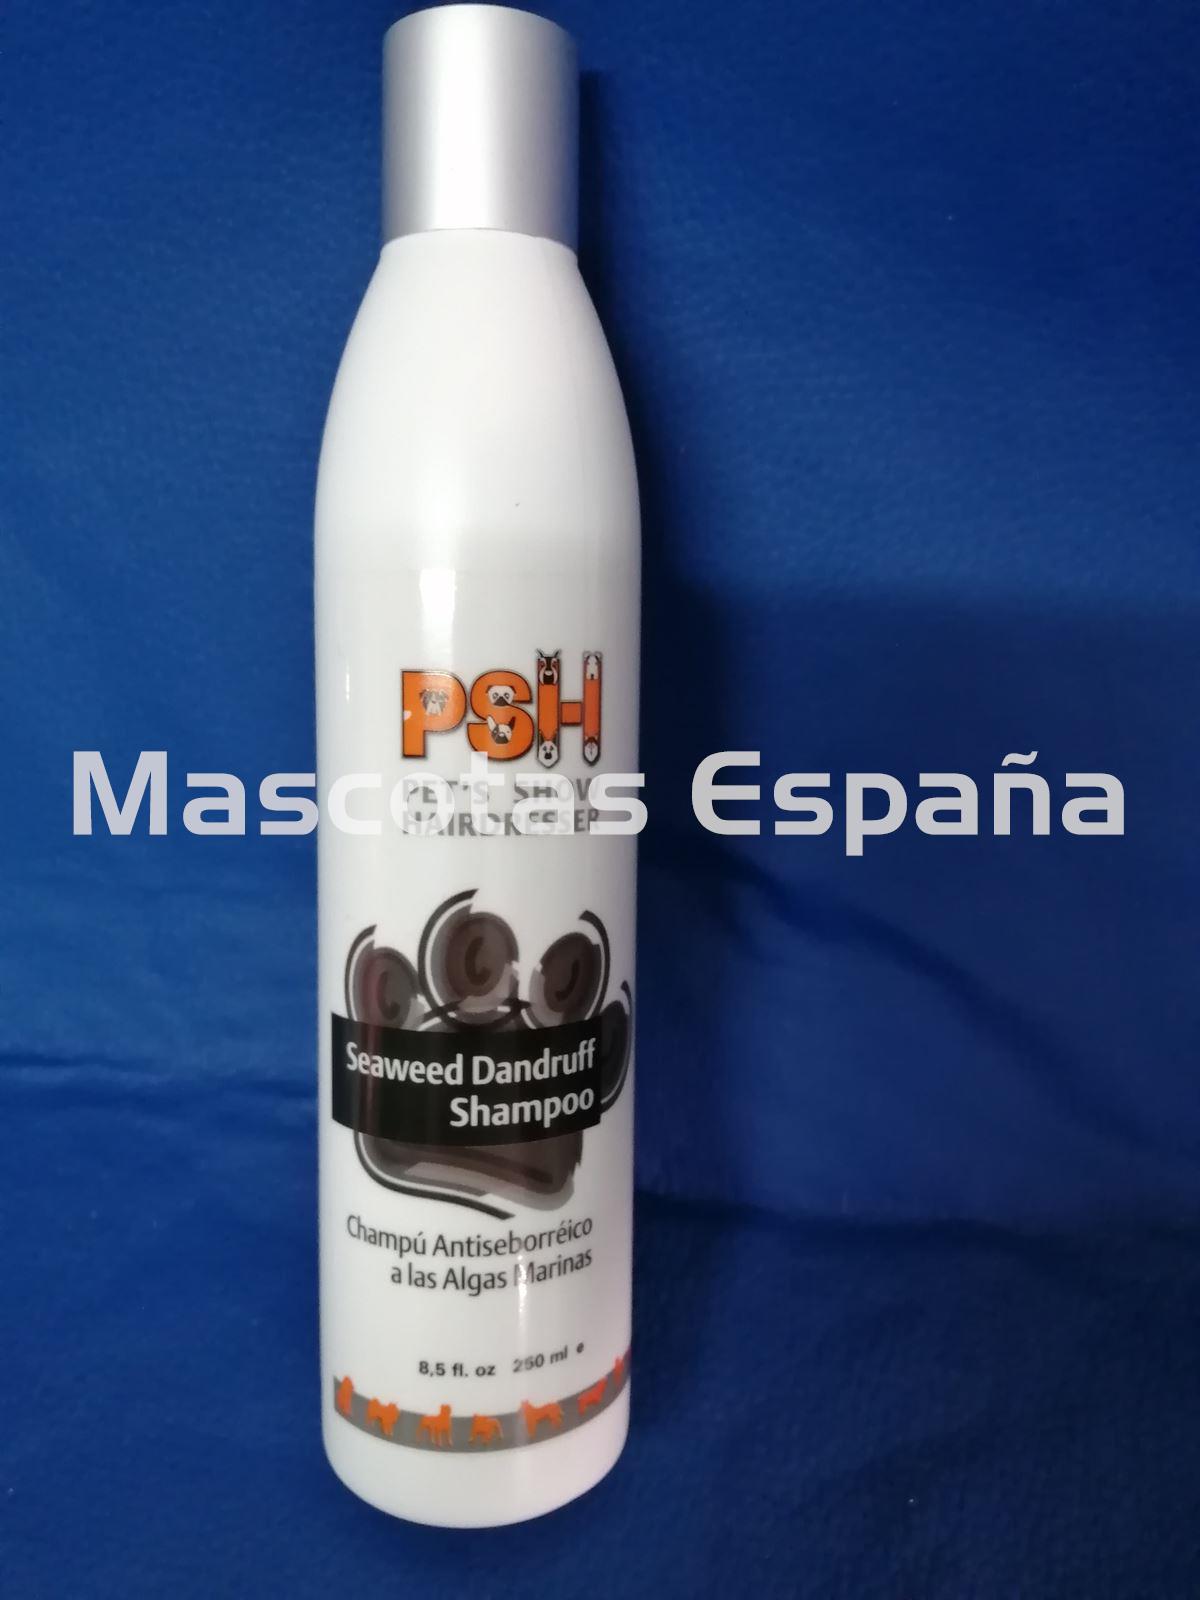 PSH Seaweed Dandruff Shampoo (Champú Antiseborréico a las algas marinas) 250ml - Imagen 1